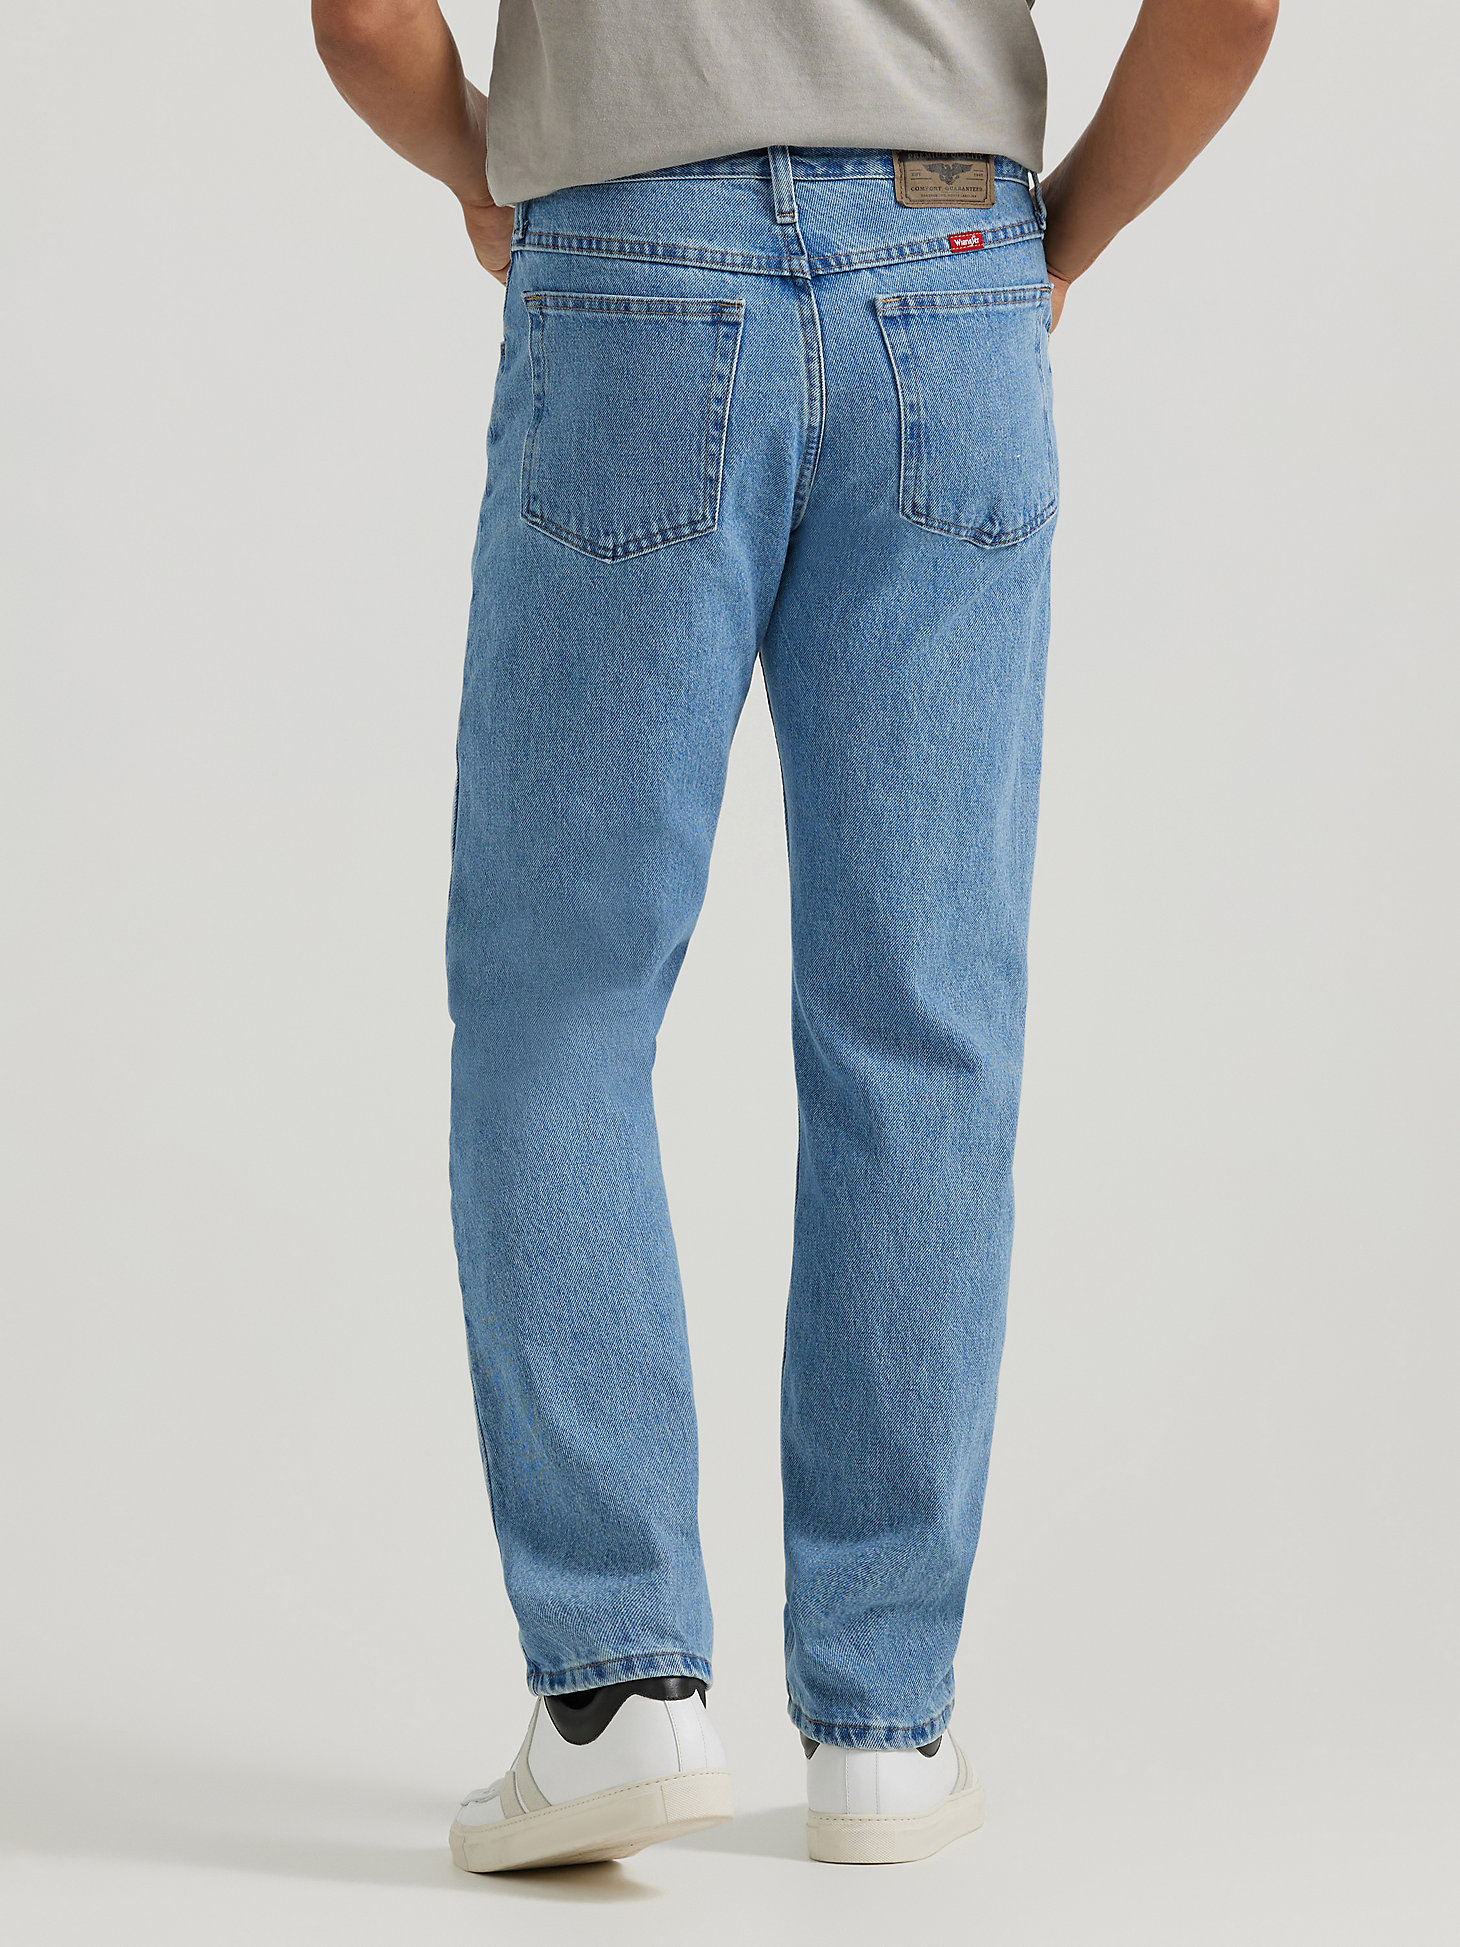 Wrangler® Five Star Premium Denim Regular Fit Jean in Lt Stonewash alternative view 1